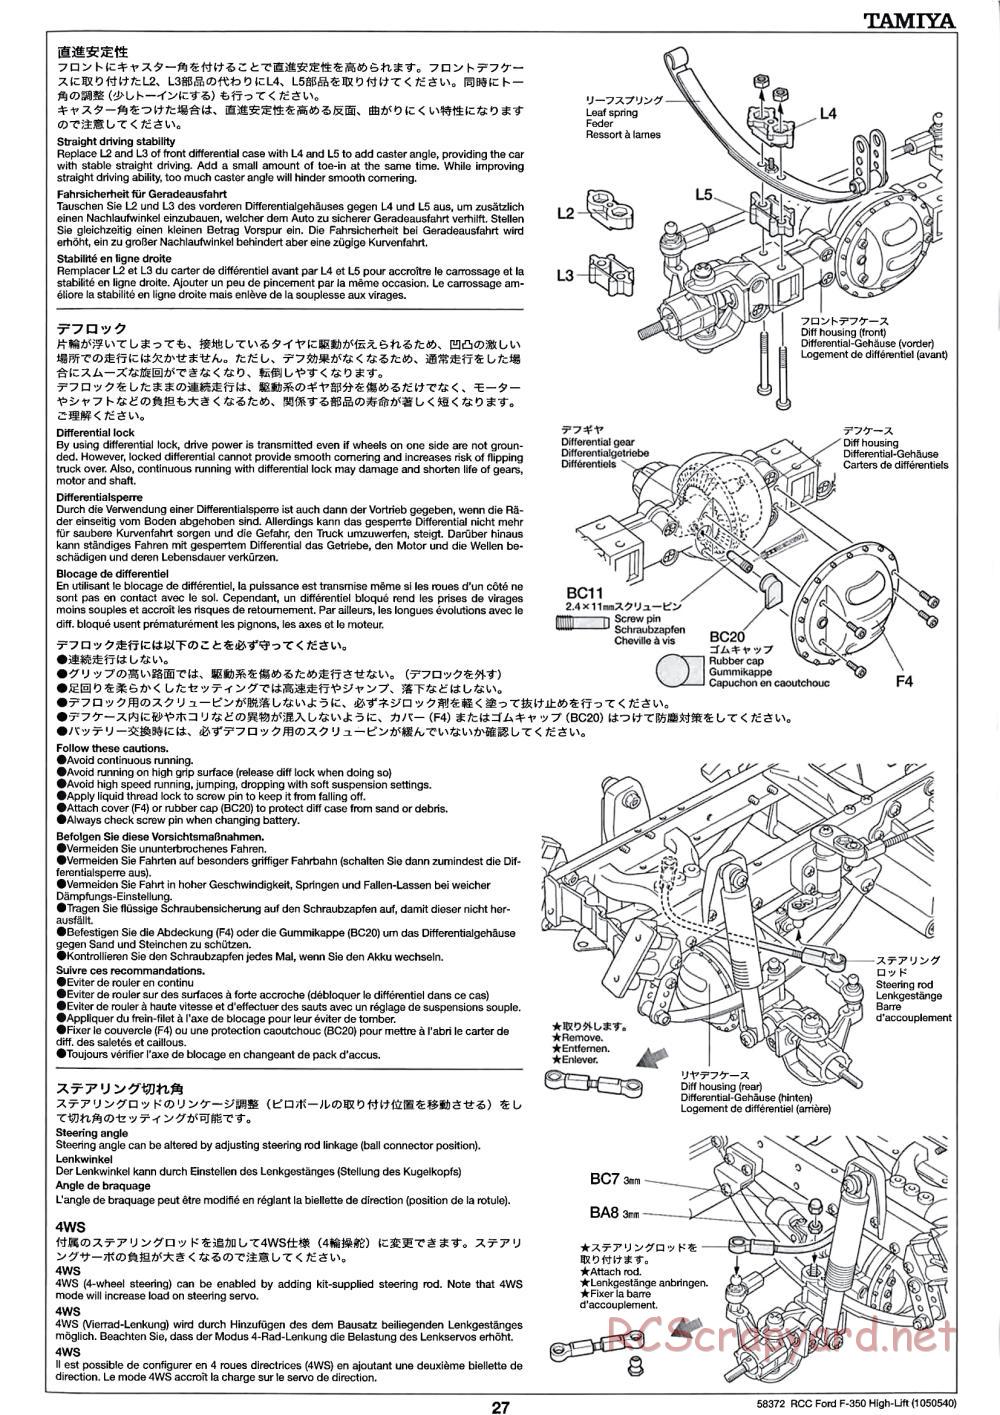 Tamiya - Ford F350 High-Lift Chassis - Manual - Page 27